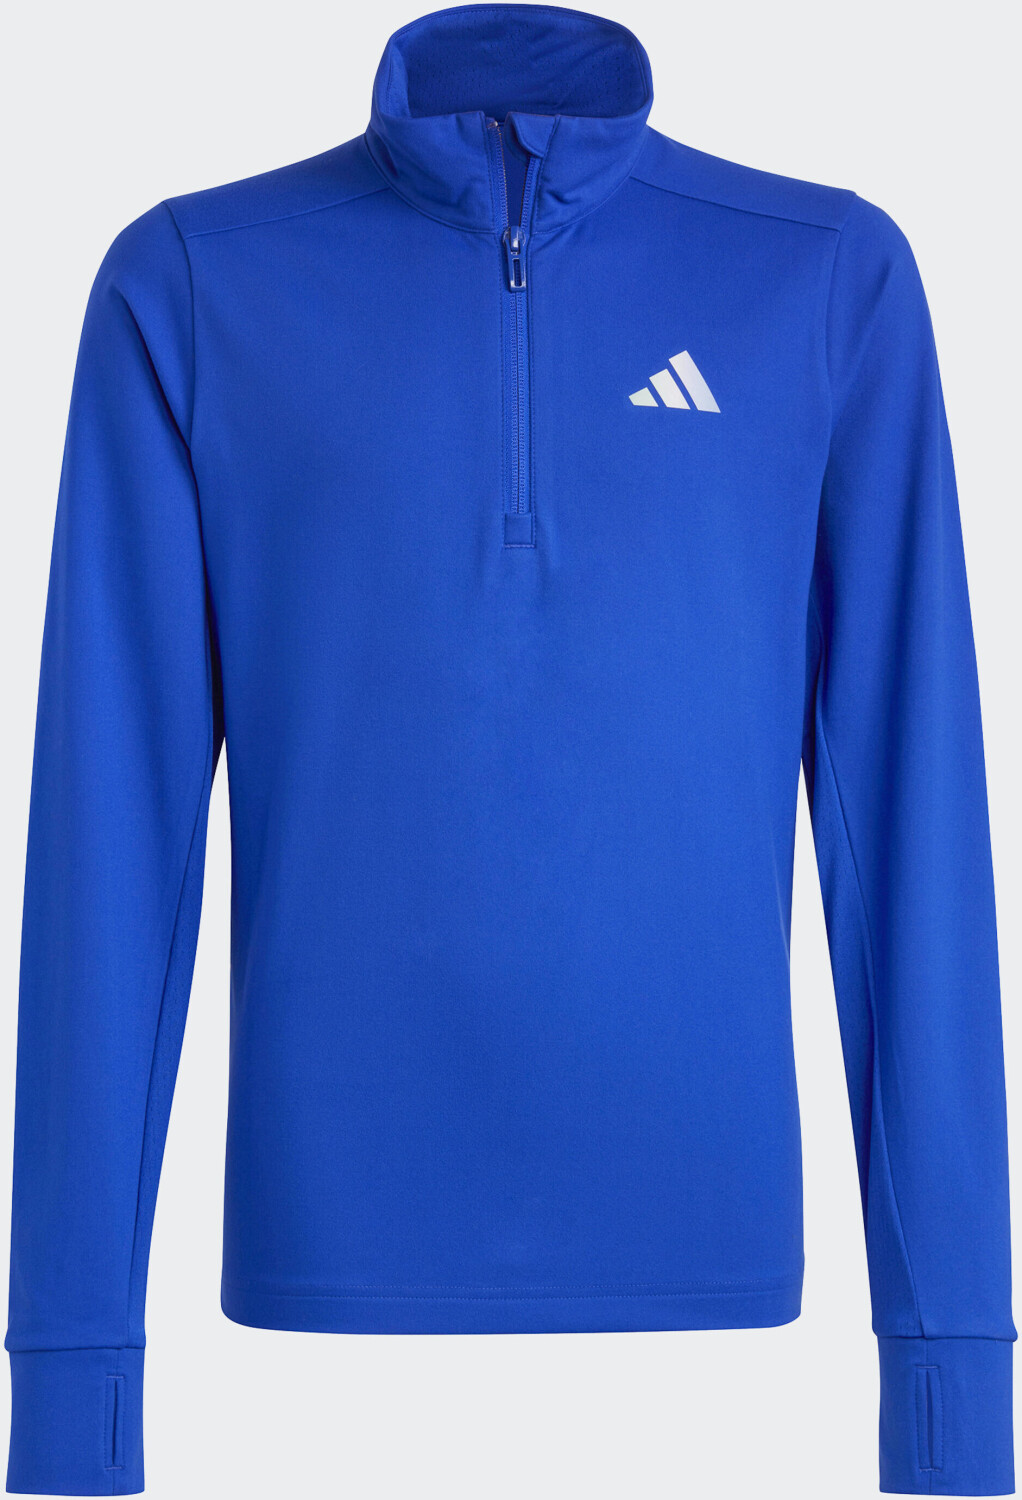 Adidas AEROREADY Half-Zip Longsleeve lucid | € 20,99 bei blue/reflective ab silver Preisvergleich